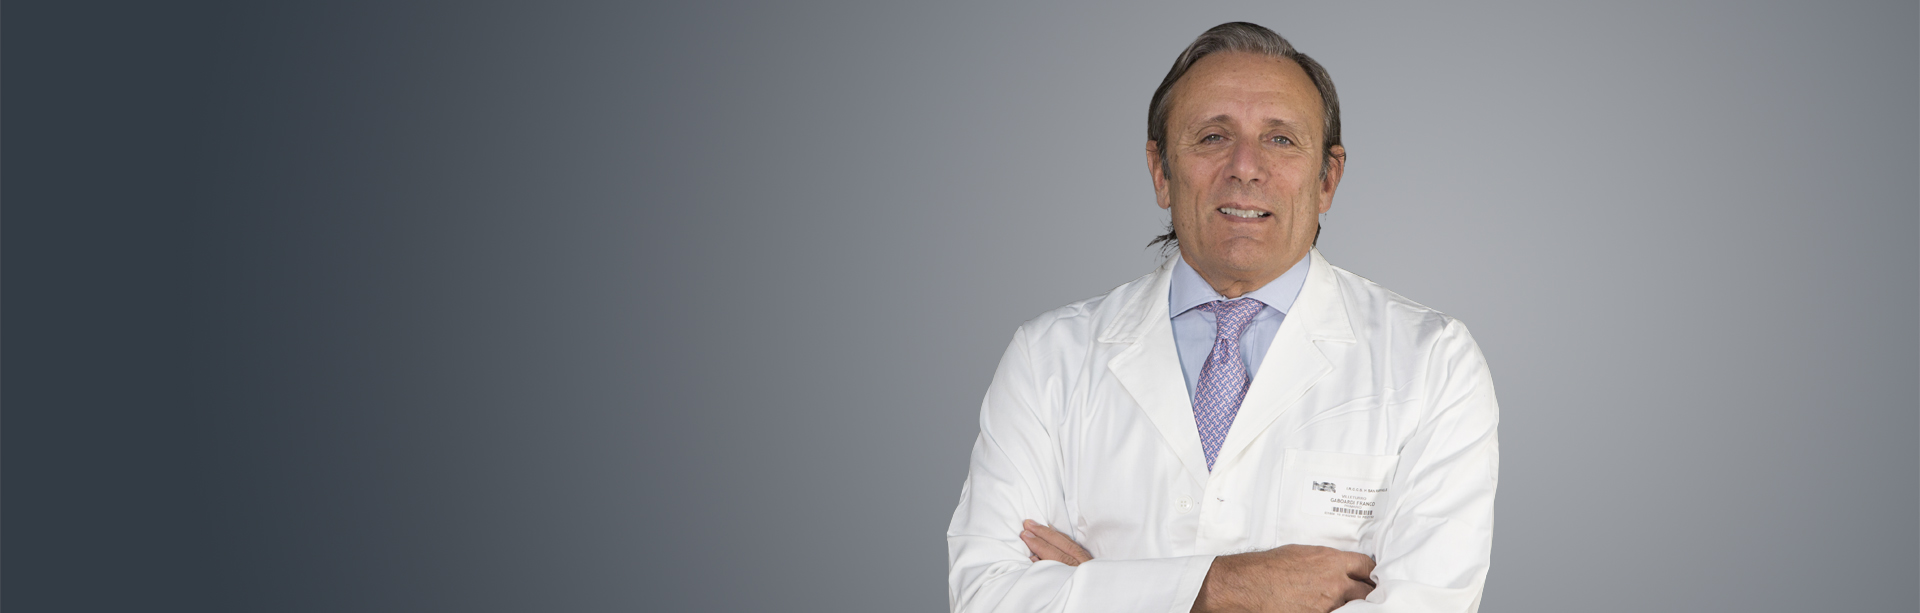 Dr. Franco Gaboardi